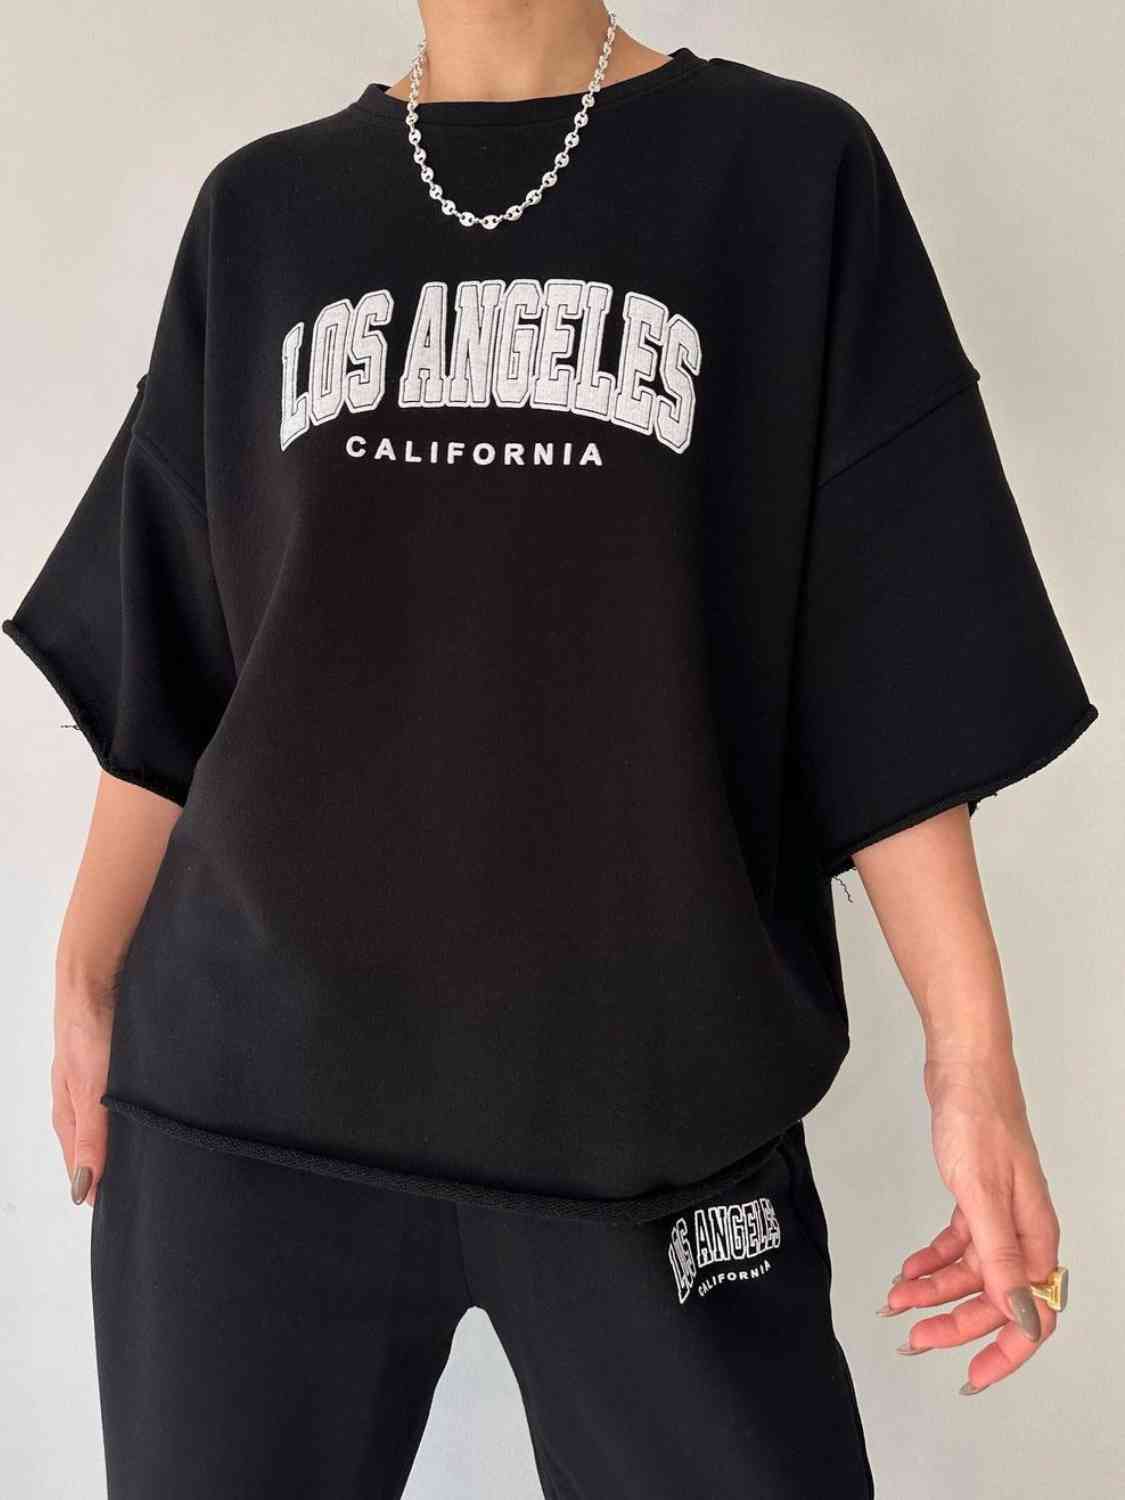 LOS ANGELES CALIFORNIA Graphic Sweatshirt and Sweatpants Set BLUE ZONE PLANET